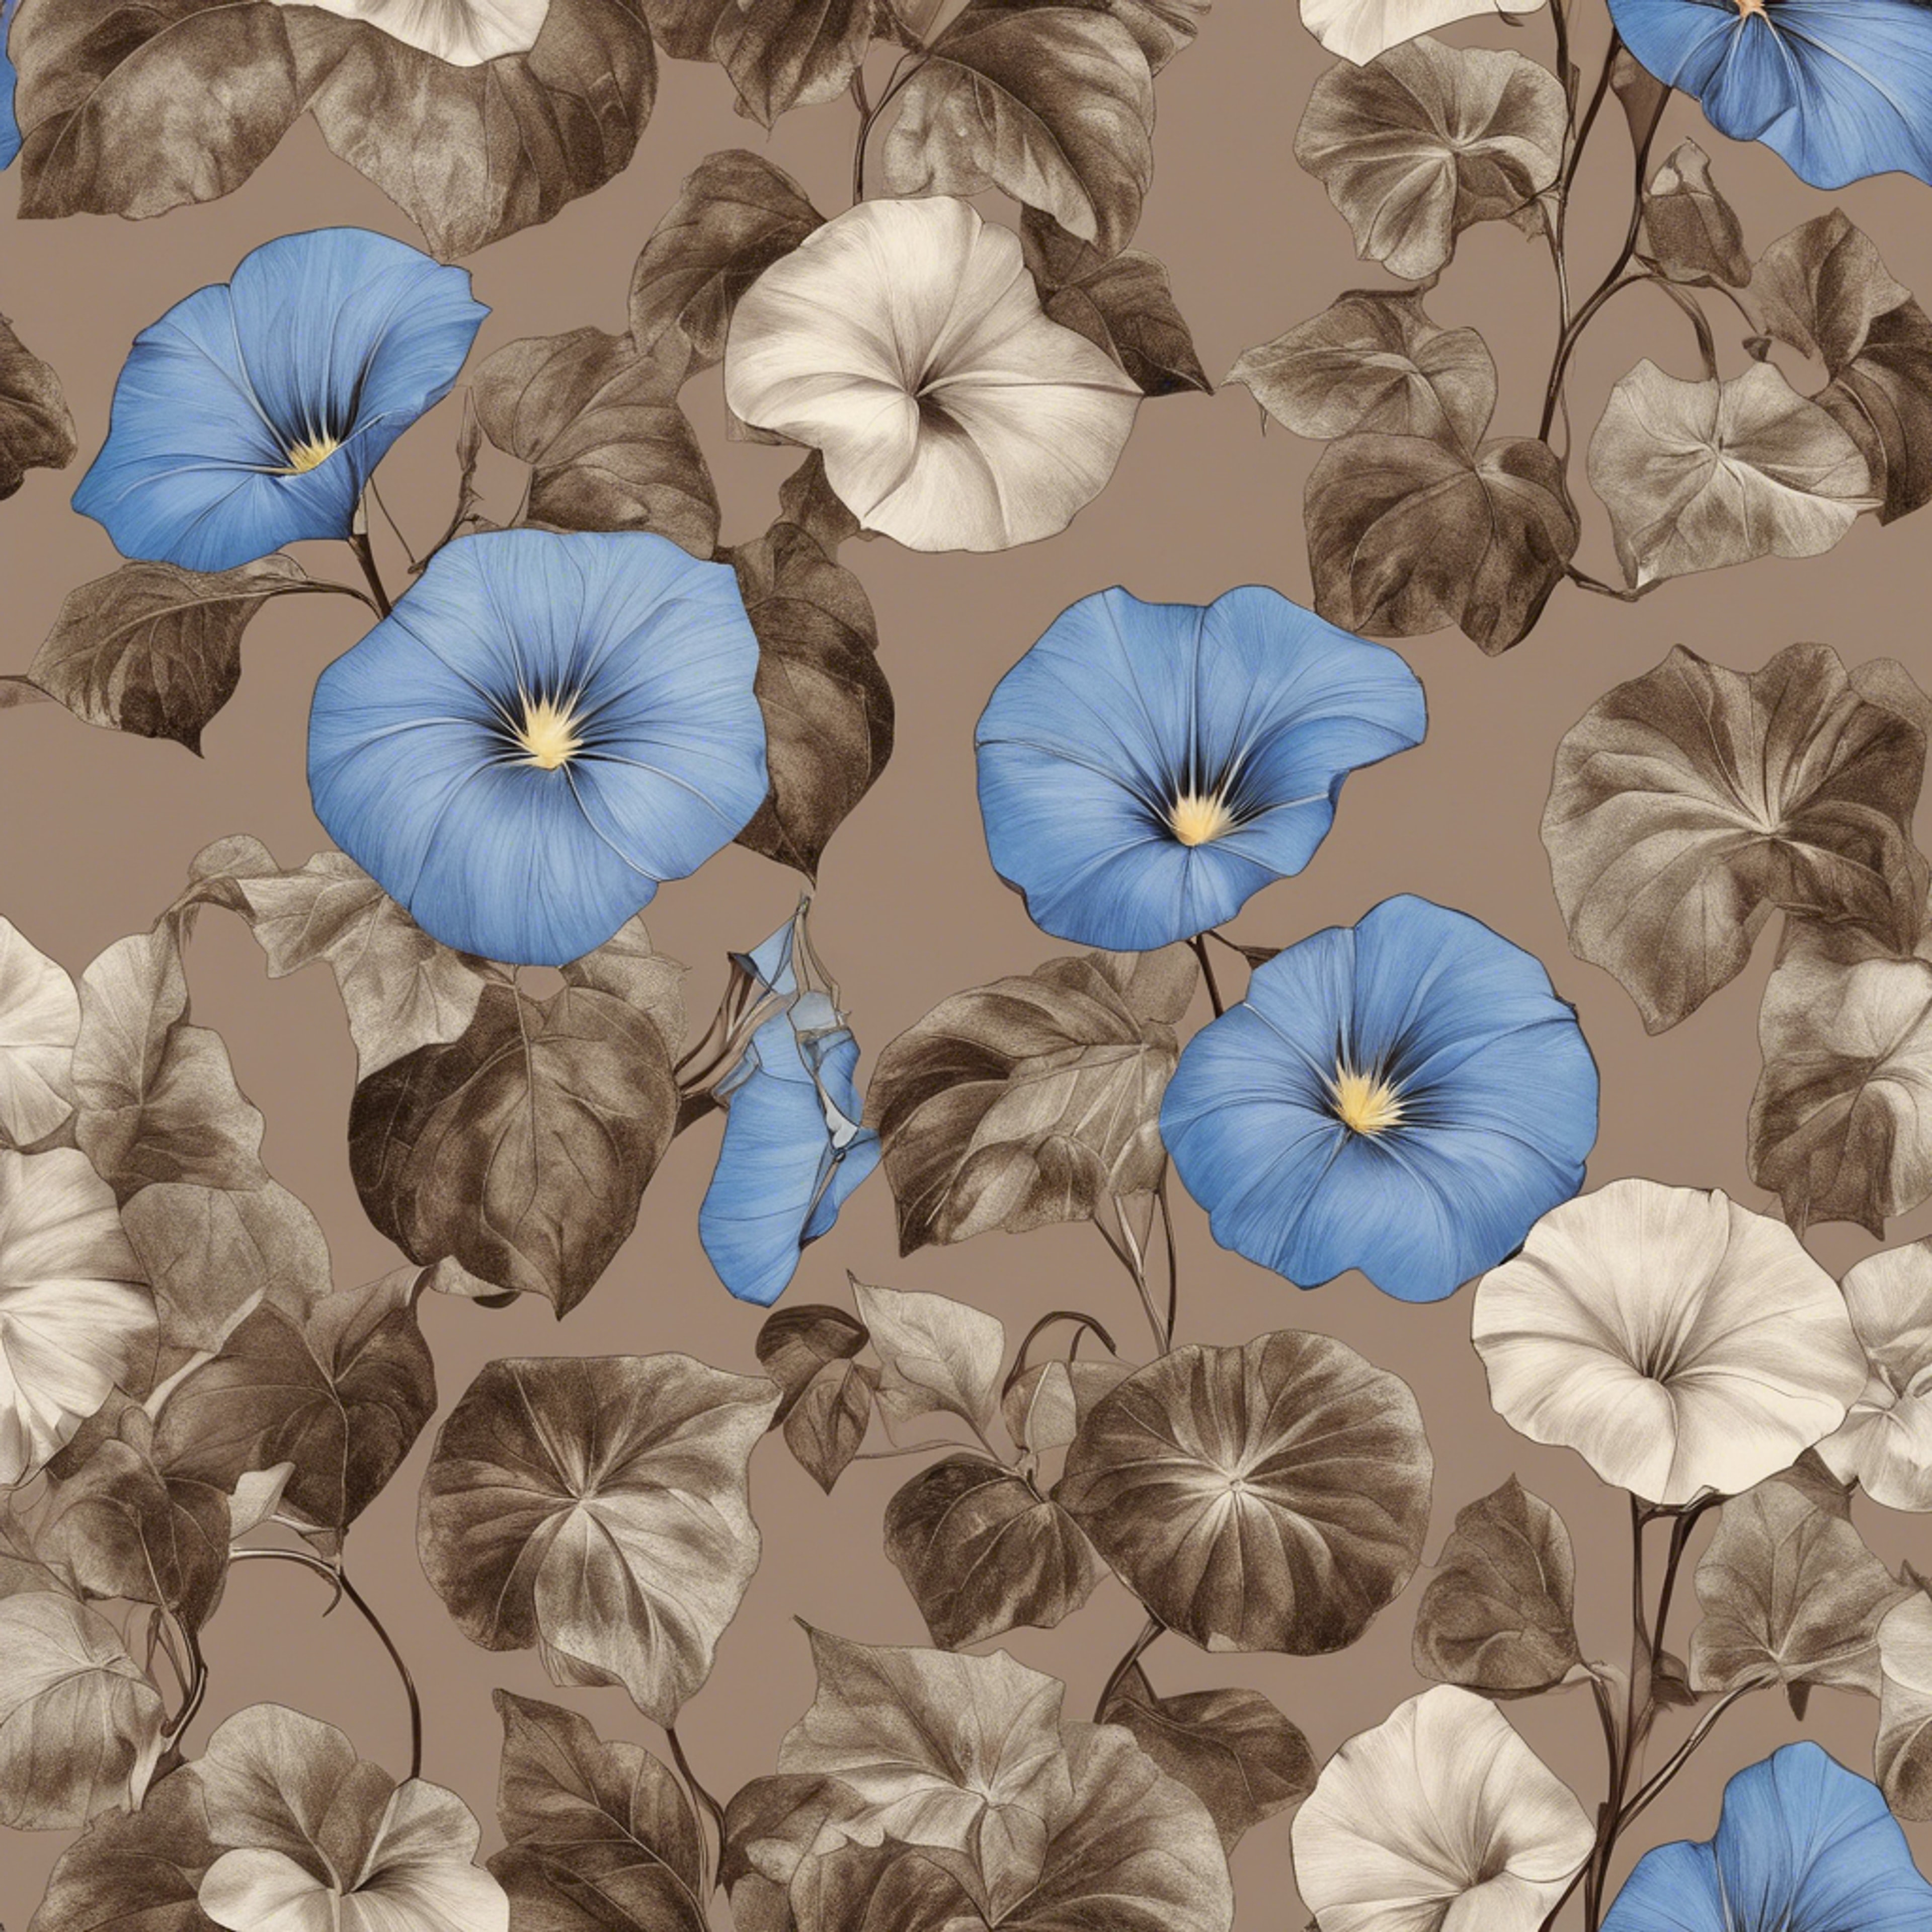 Vintage wallpaper design of nostalgic blue morning glories against a coffee brown backdrop. Tapeta[8d5b0df35da548e6bc5c]